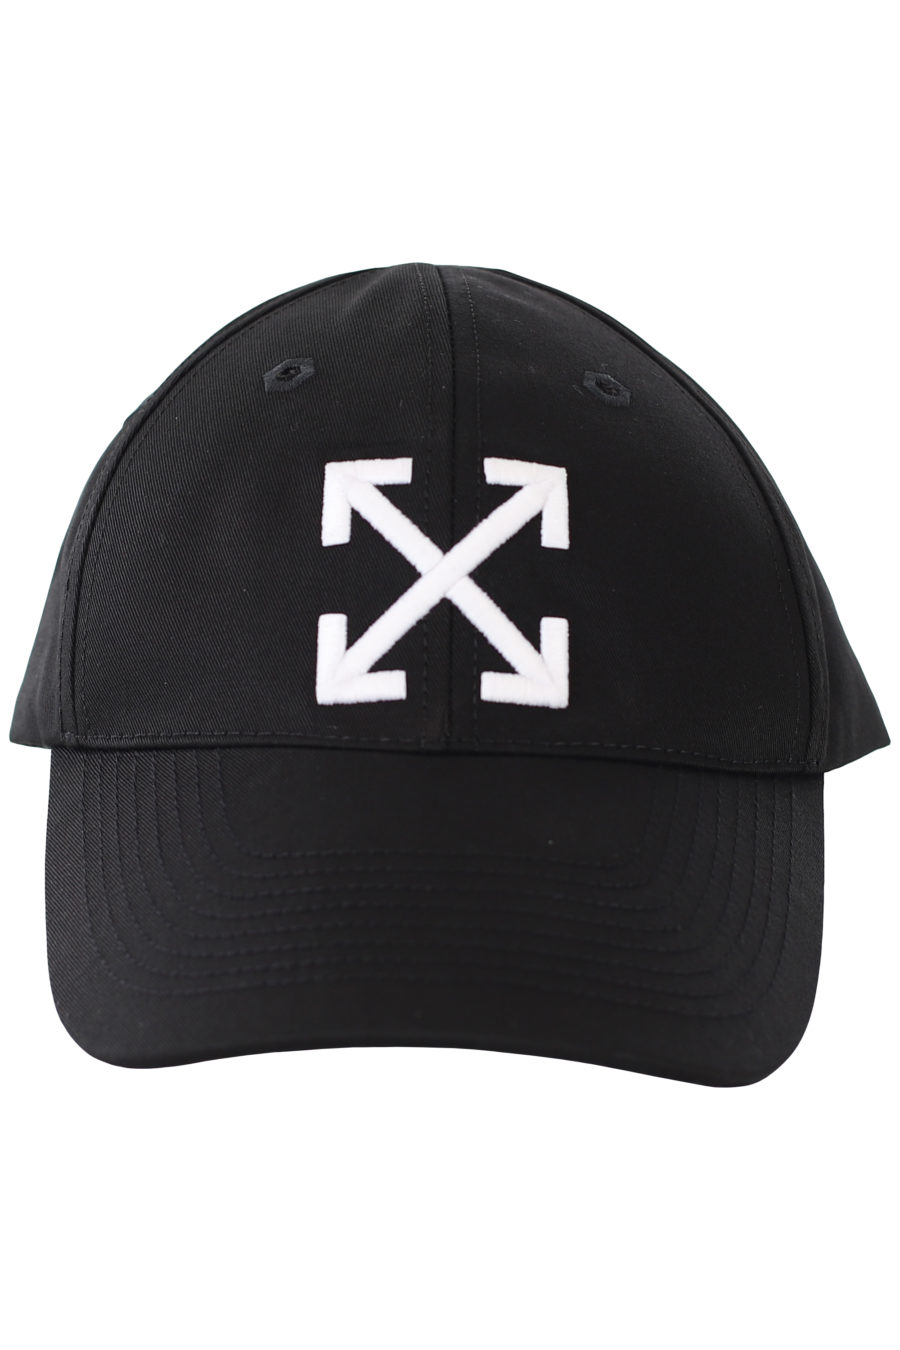 Gorra negra con flechas bordadas - IMG 9391